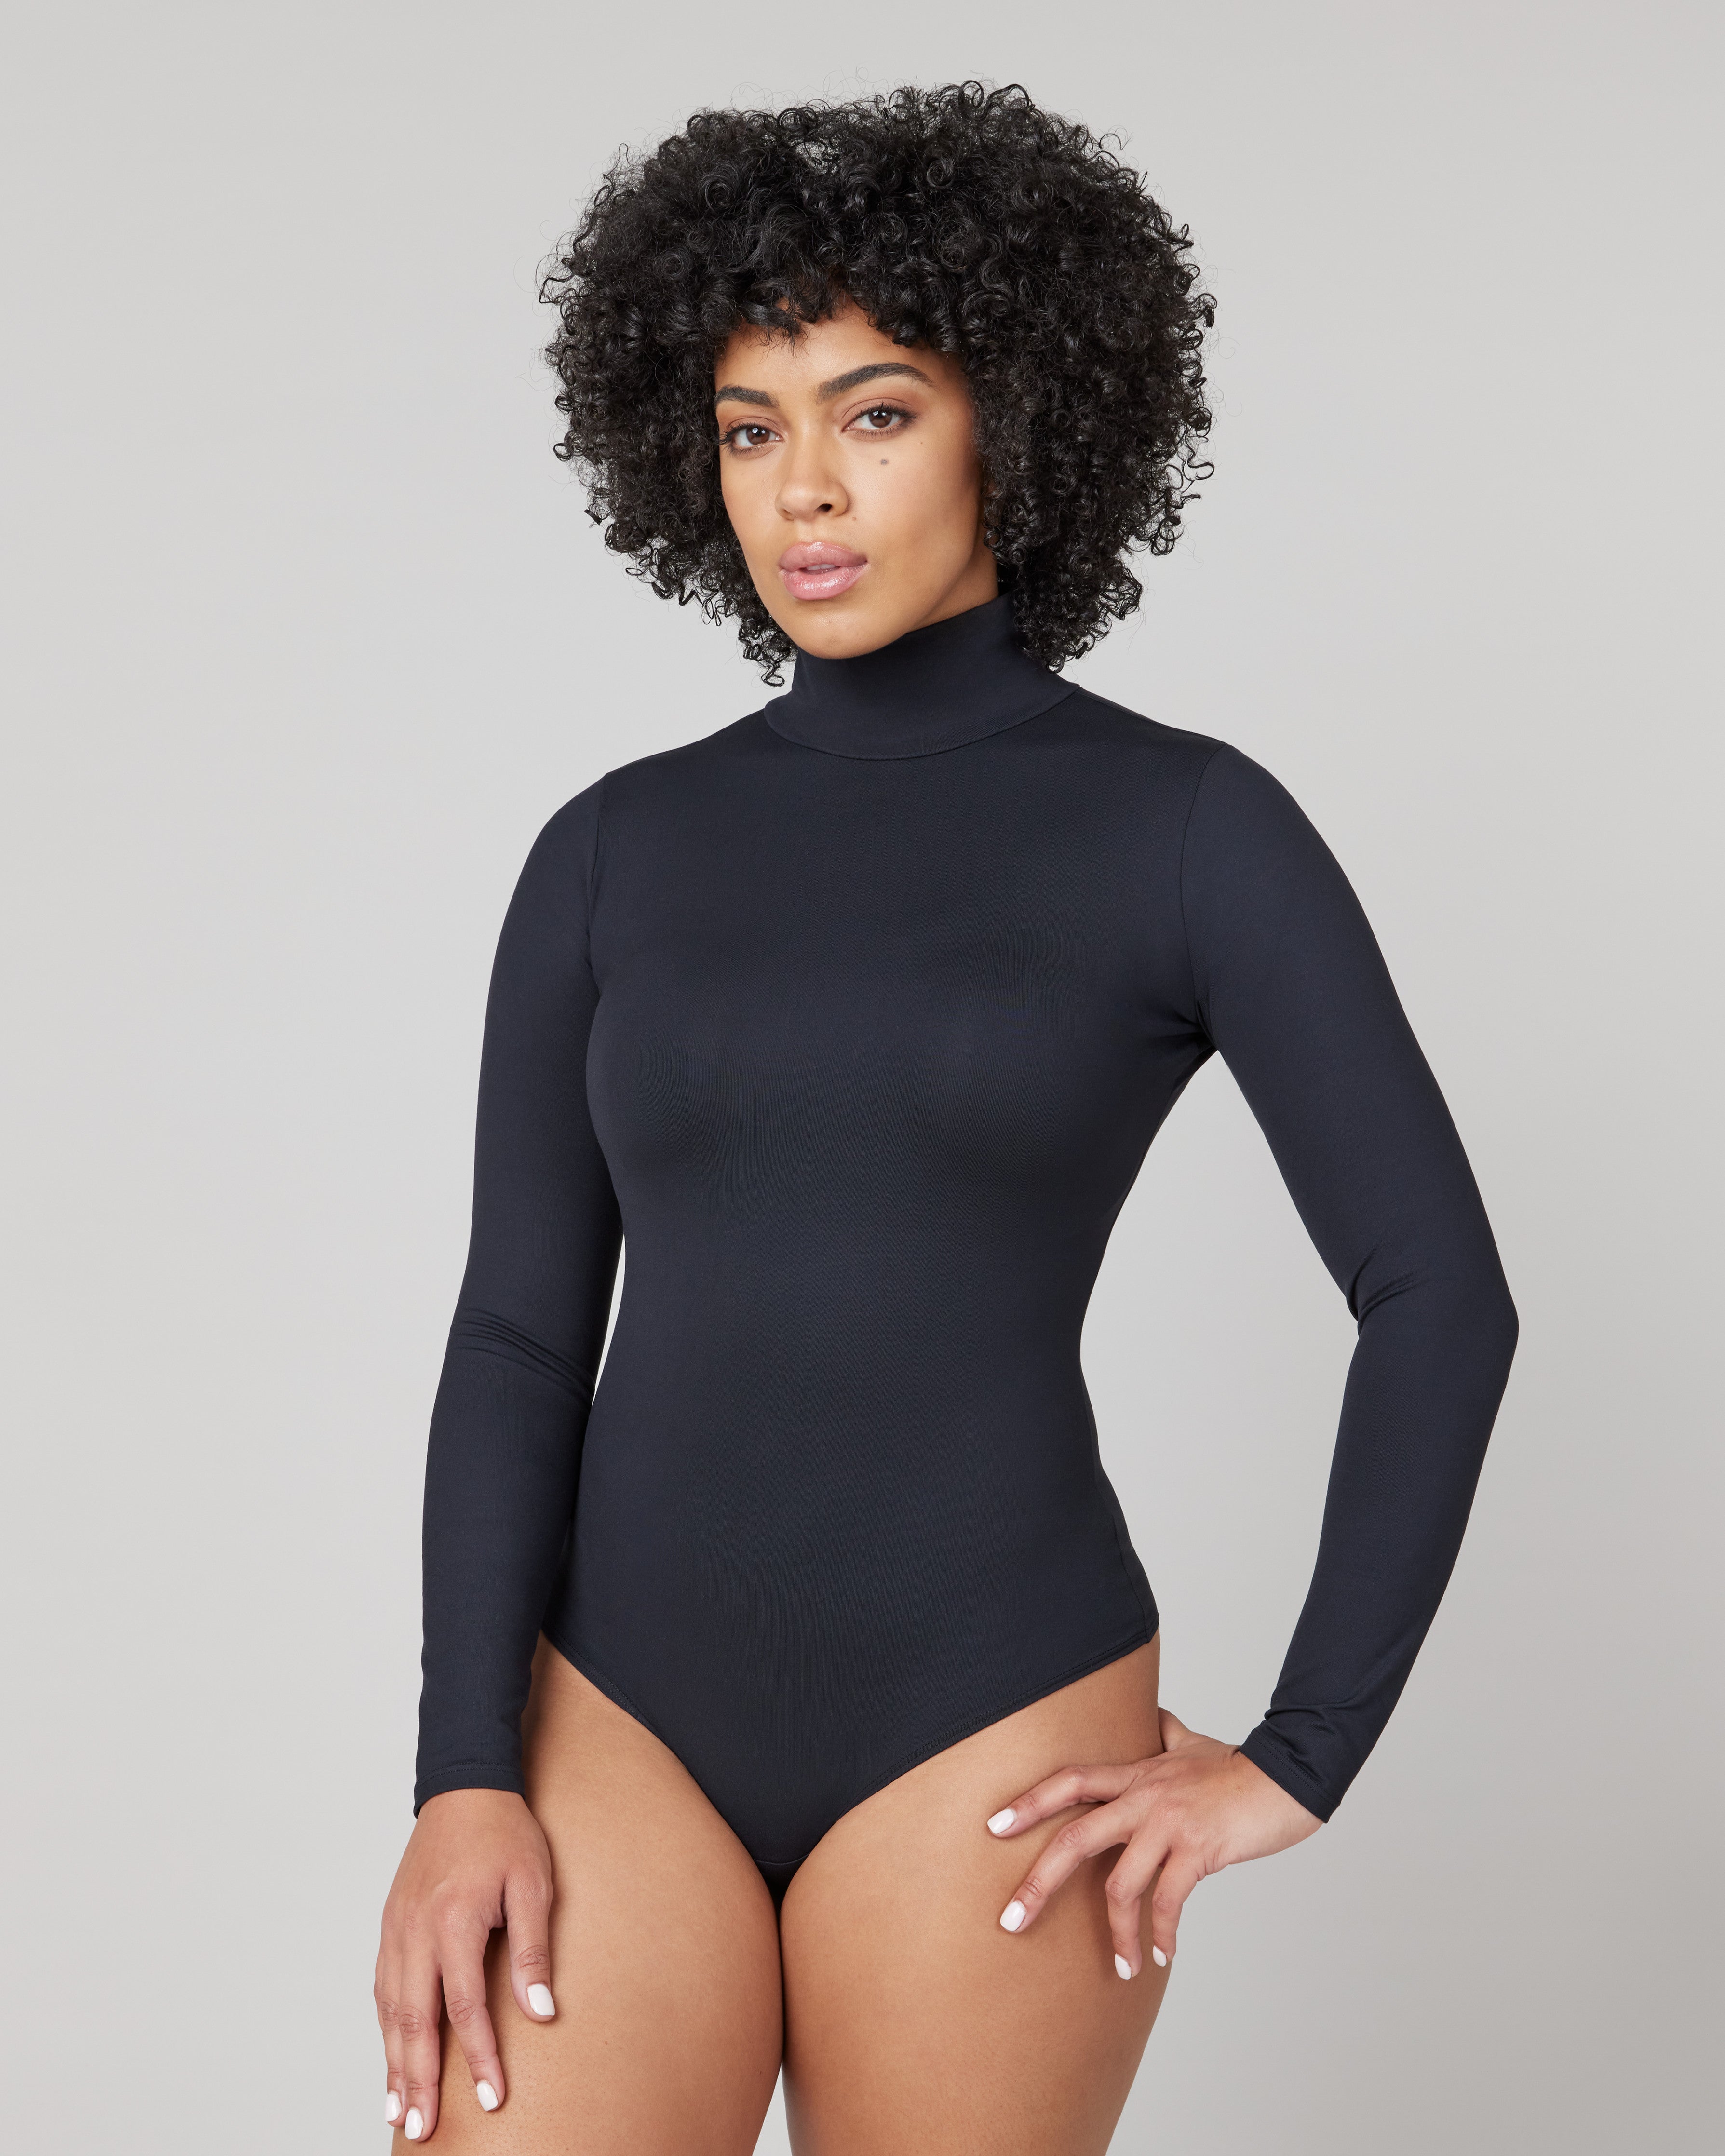  Thong Bodysuit For Women Long Sleeve Tops Tummy Control  Square Neck Body Suit Black Shirt For Women Clothing Black XXL